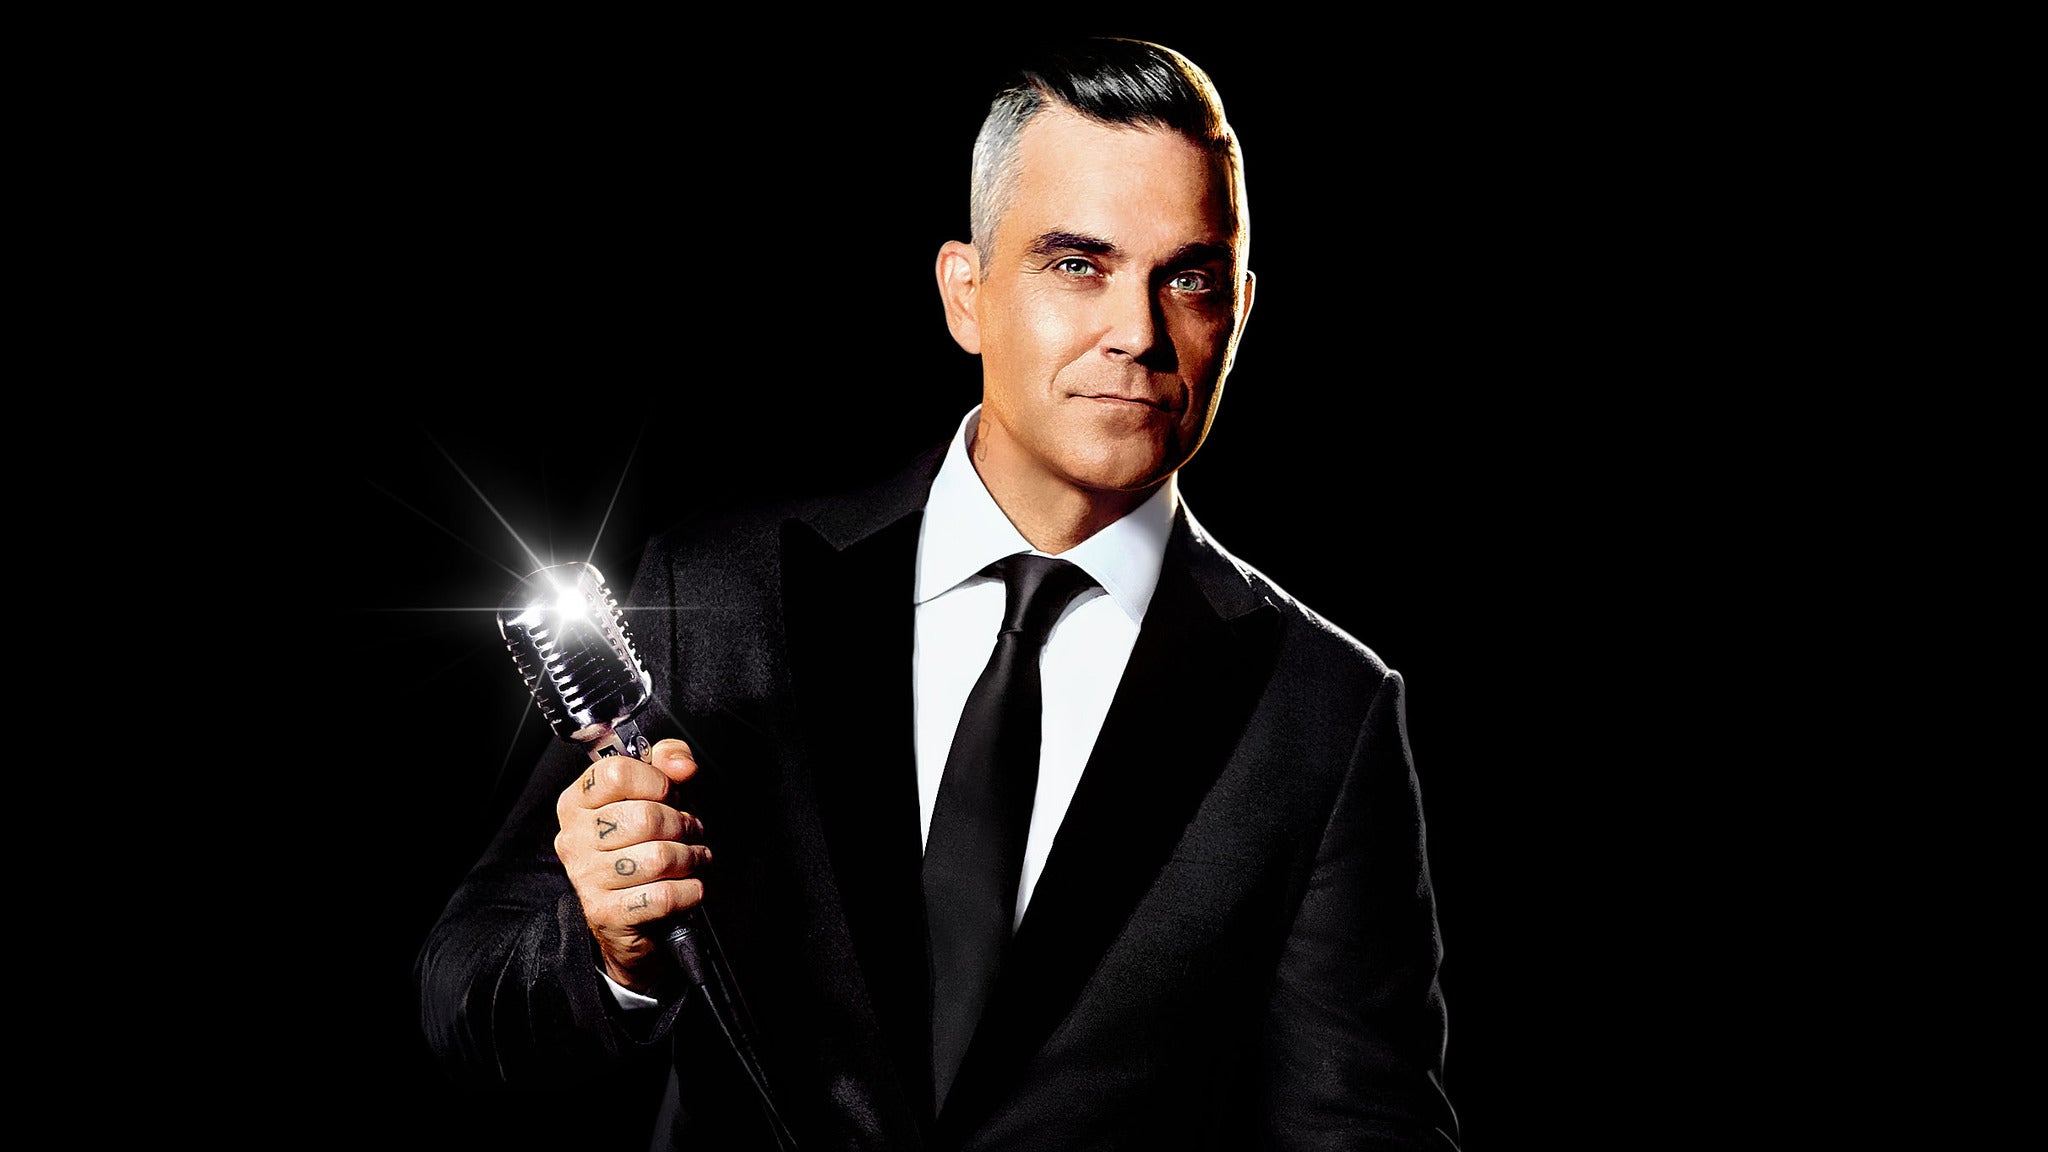 Robbie Williams in Las Vegas promo photo for Robbie Williams  presale offer code